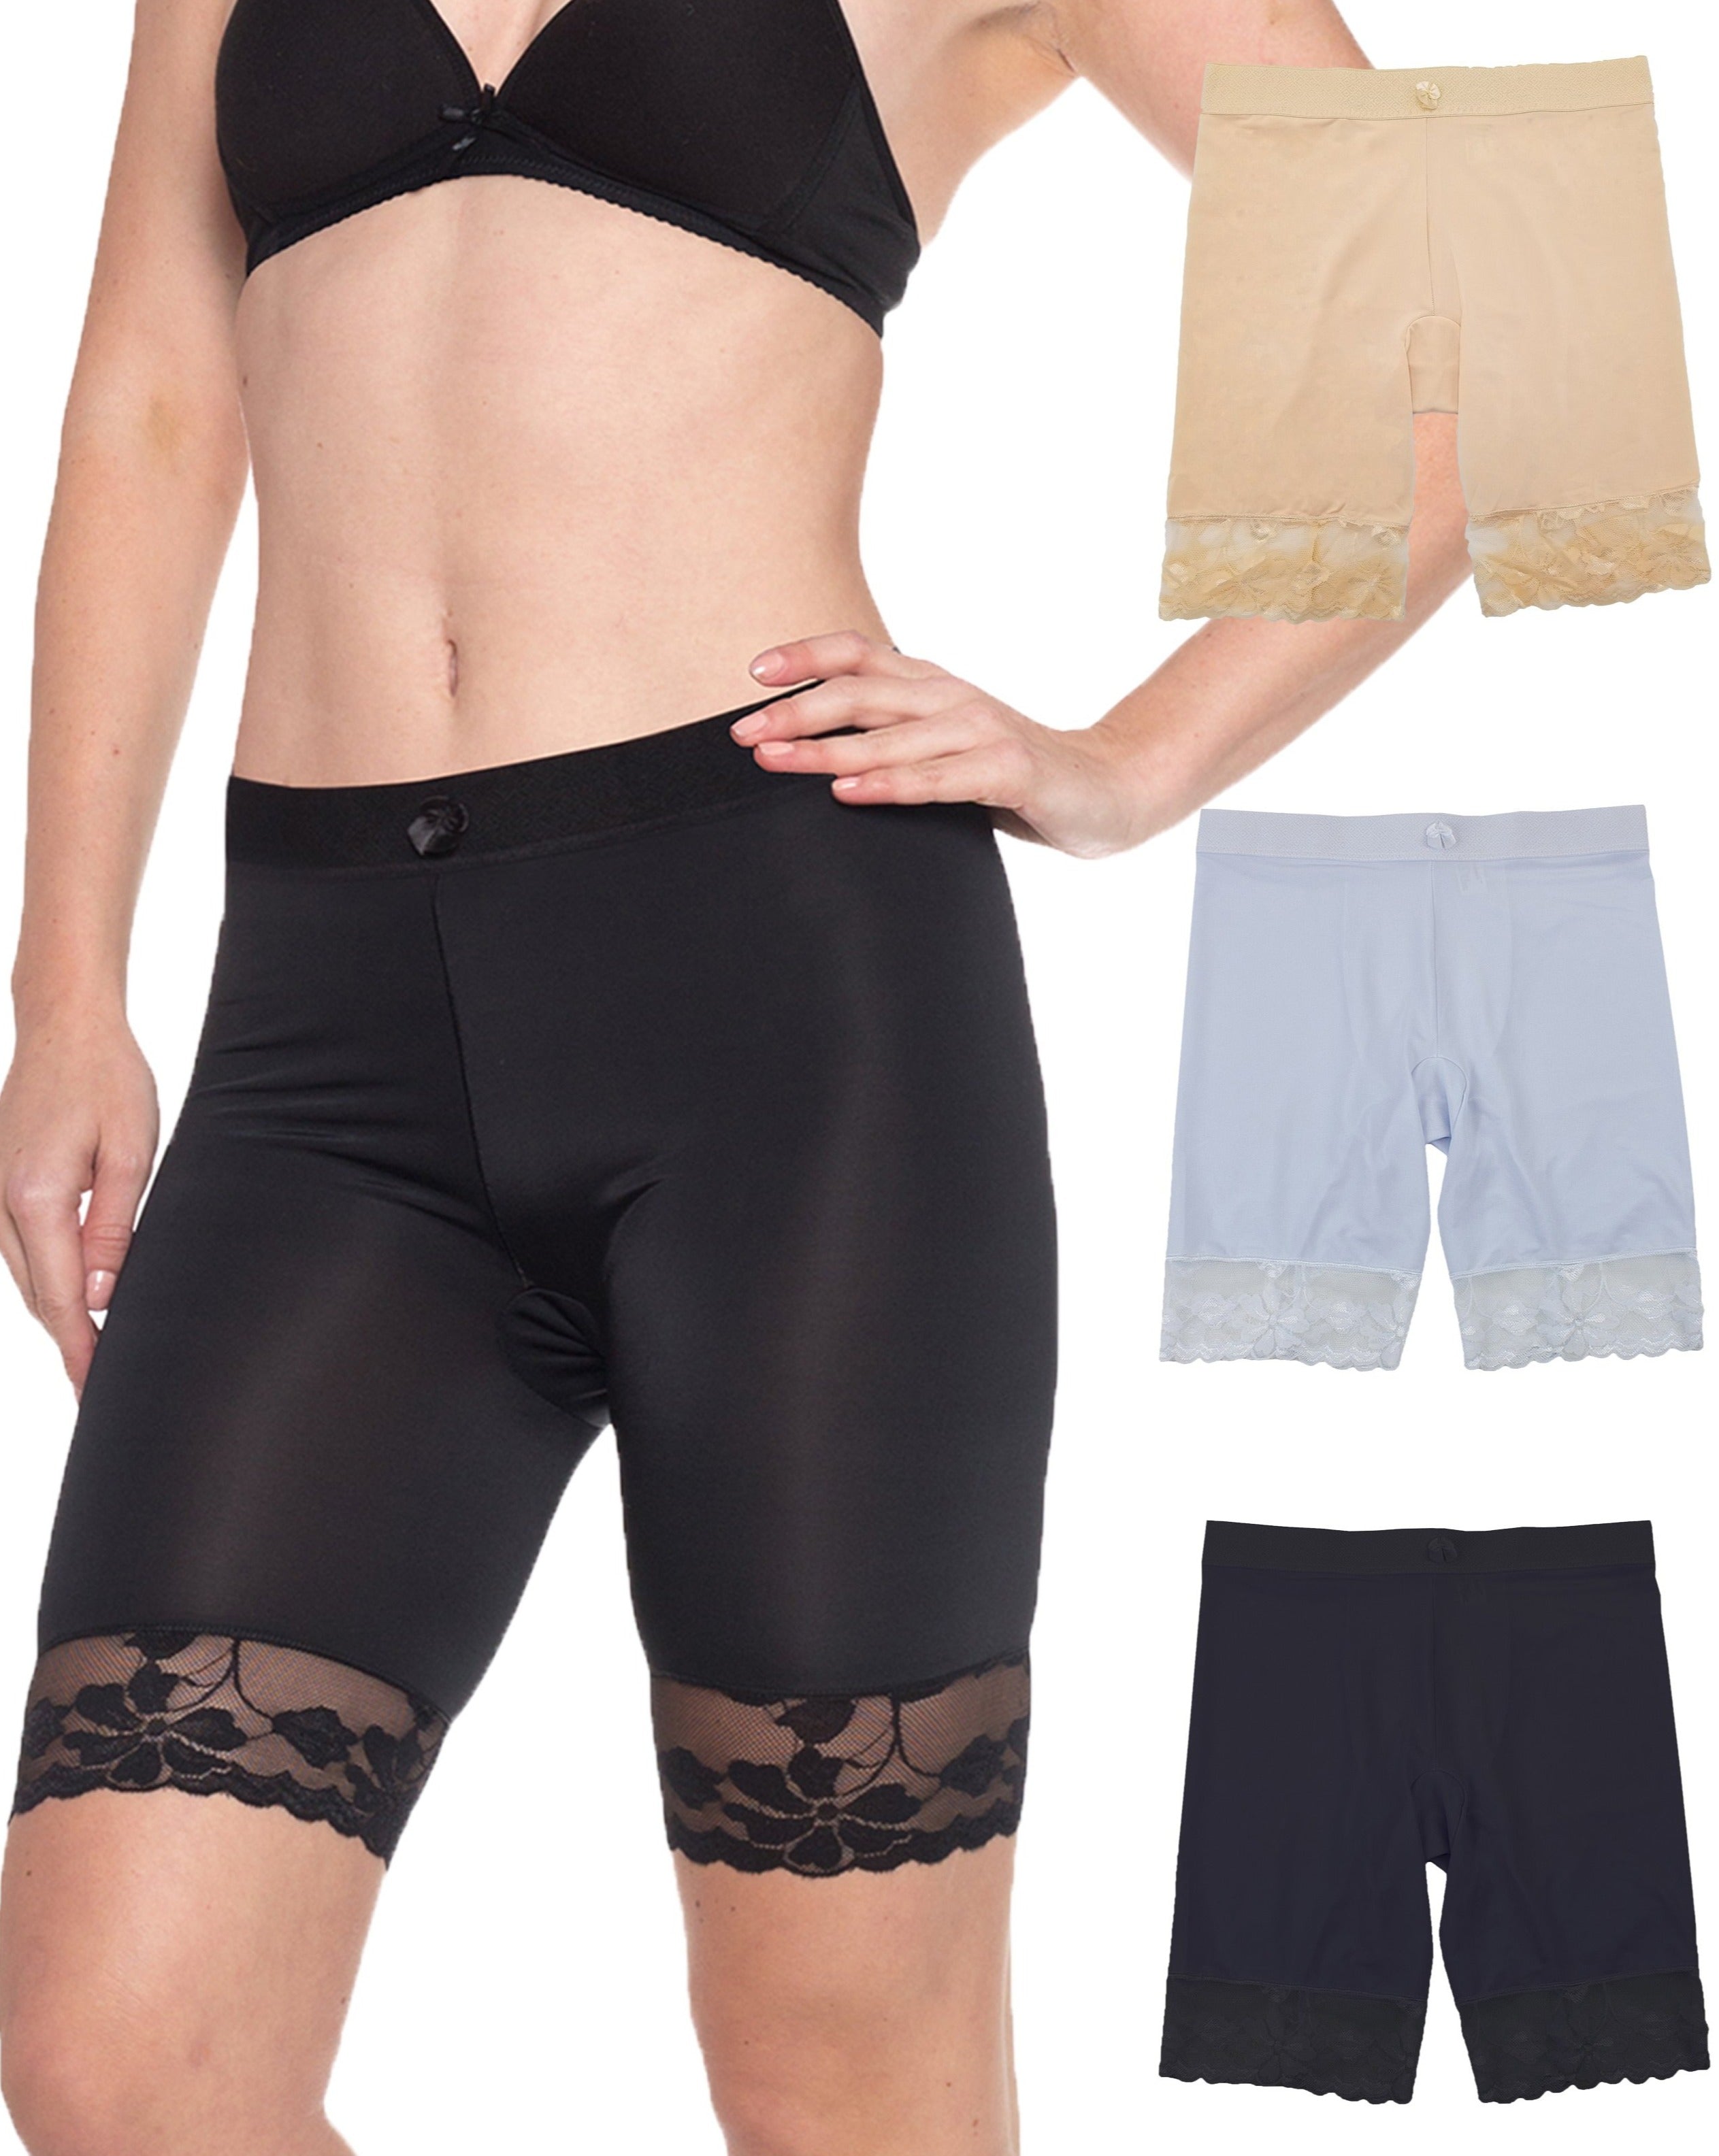 Women 3 Pack Seamless Slip Shorts For Under Dress Smooth Boyshorts